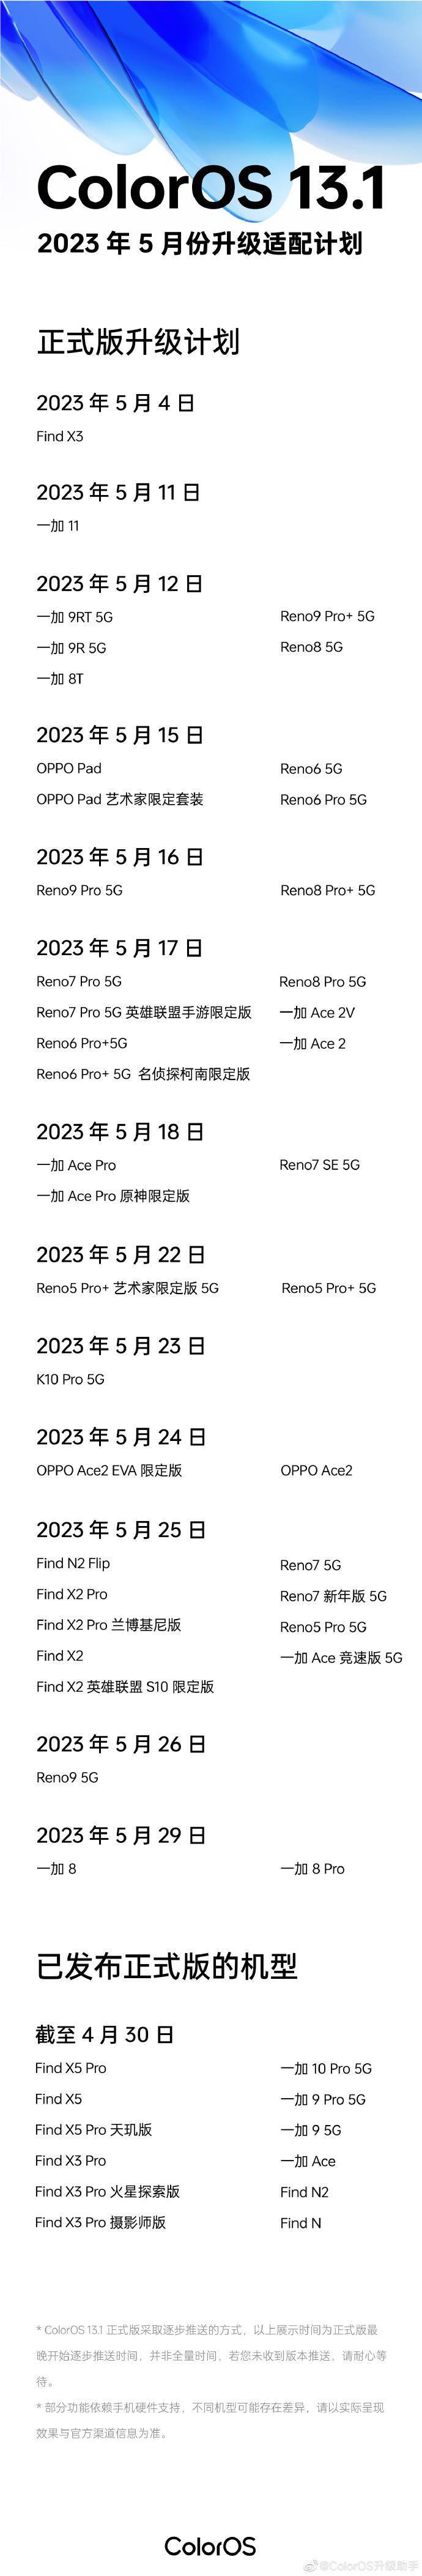 OPPO ColorOS 13.1正式版五月升级适配计划公布 将采取逐步推送的方式